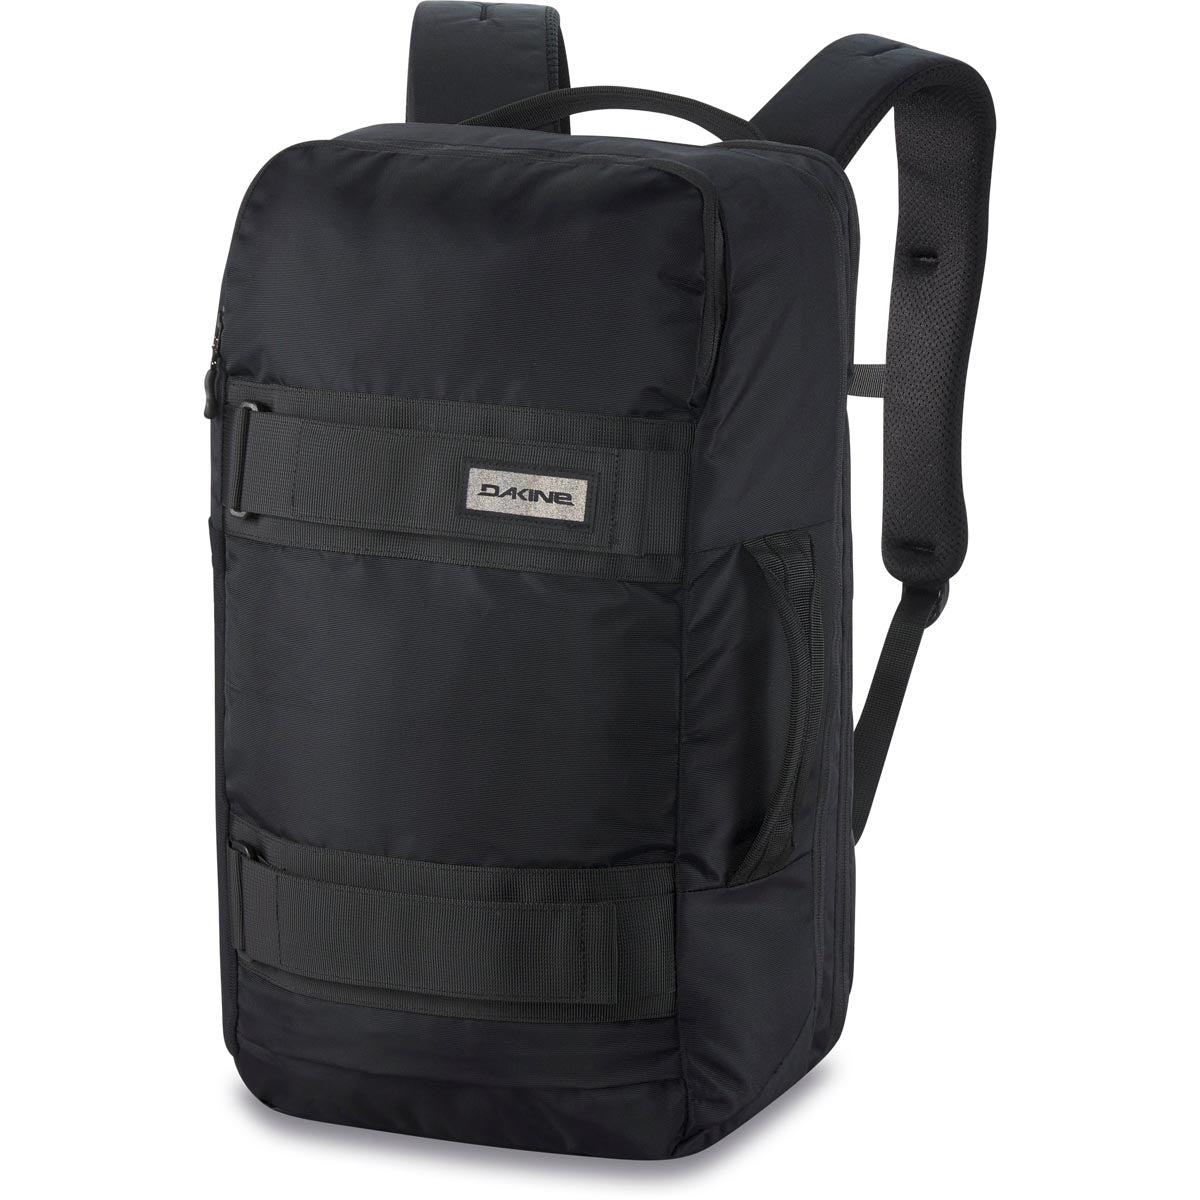 Dakine Mission Street Dlx 32l Backpack - Black Nylon image 1